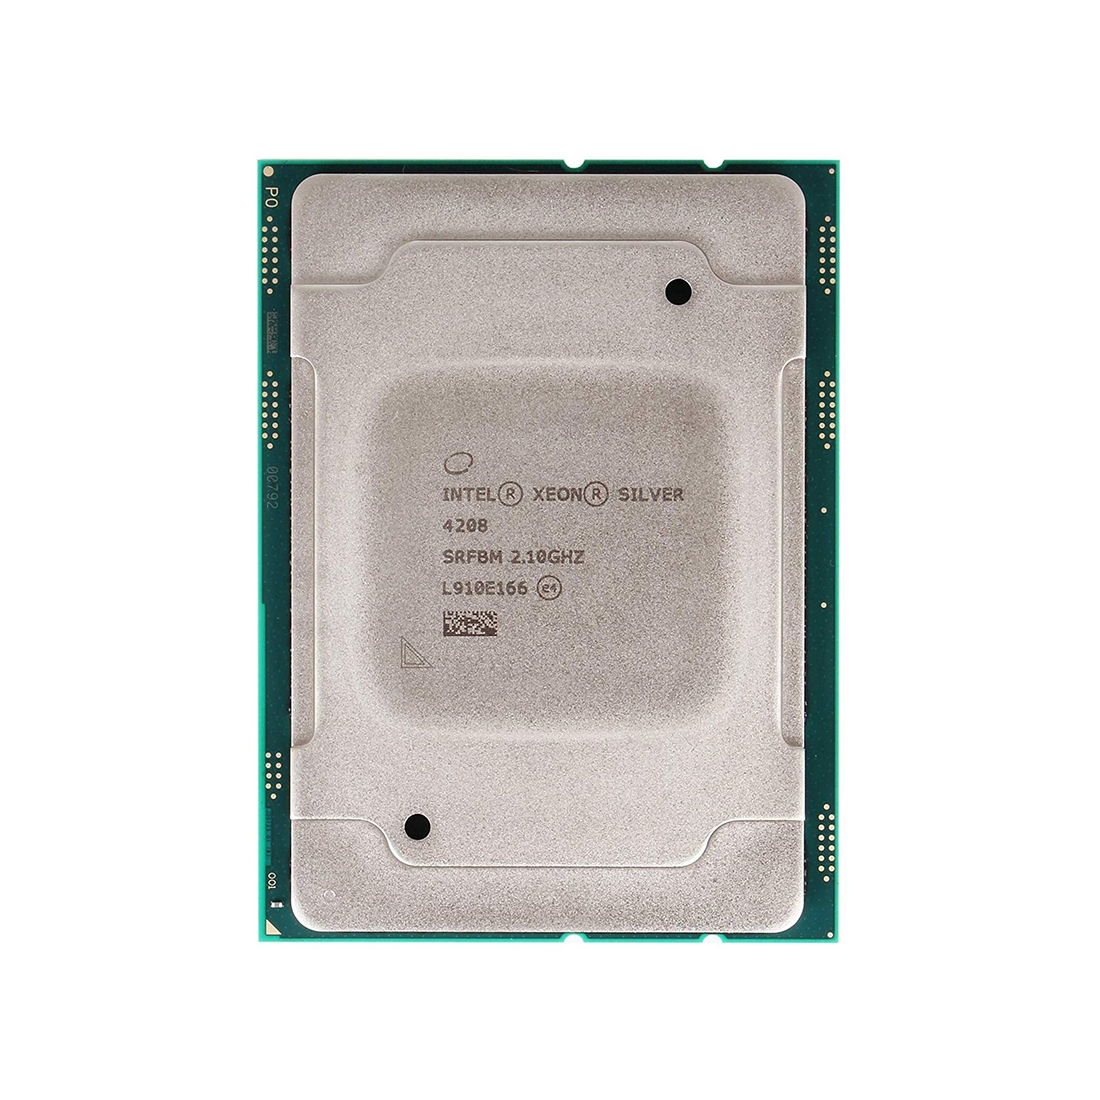 Центральный процессор (CPU), Intel, Xeon Silver Processor 4208, OEM, LGA3647, Cascade Lake, 8/16 Cor